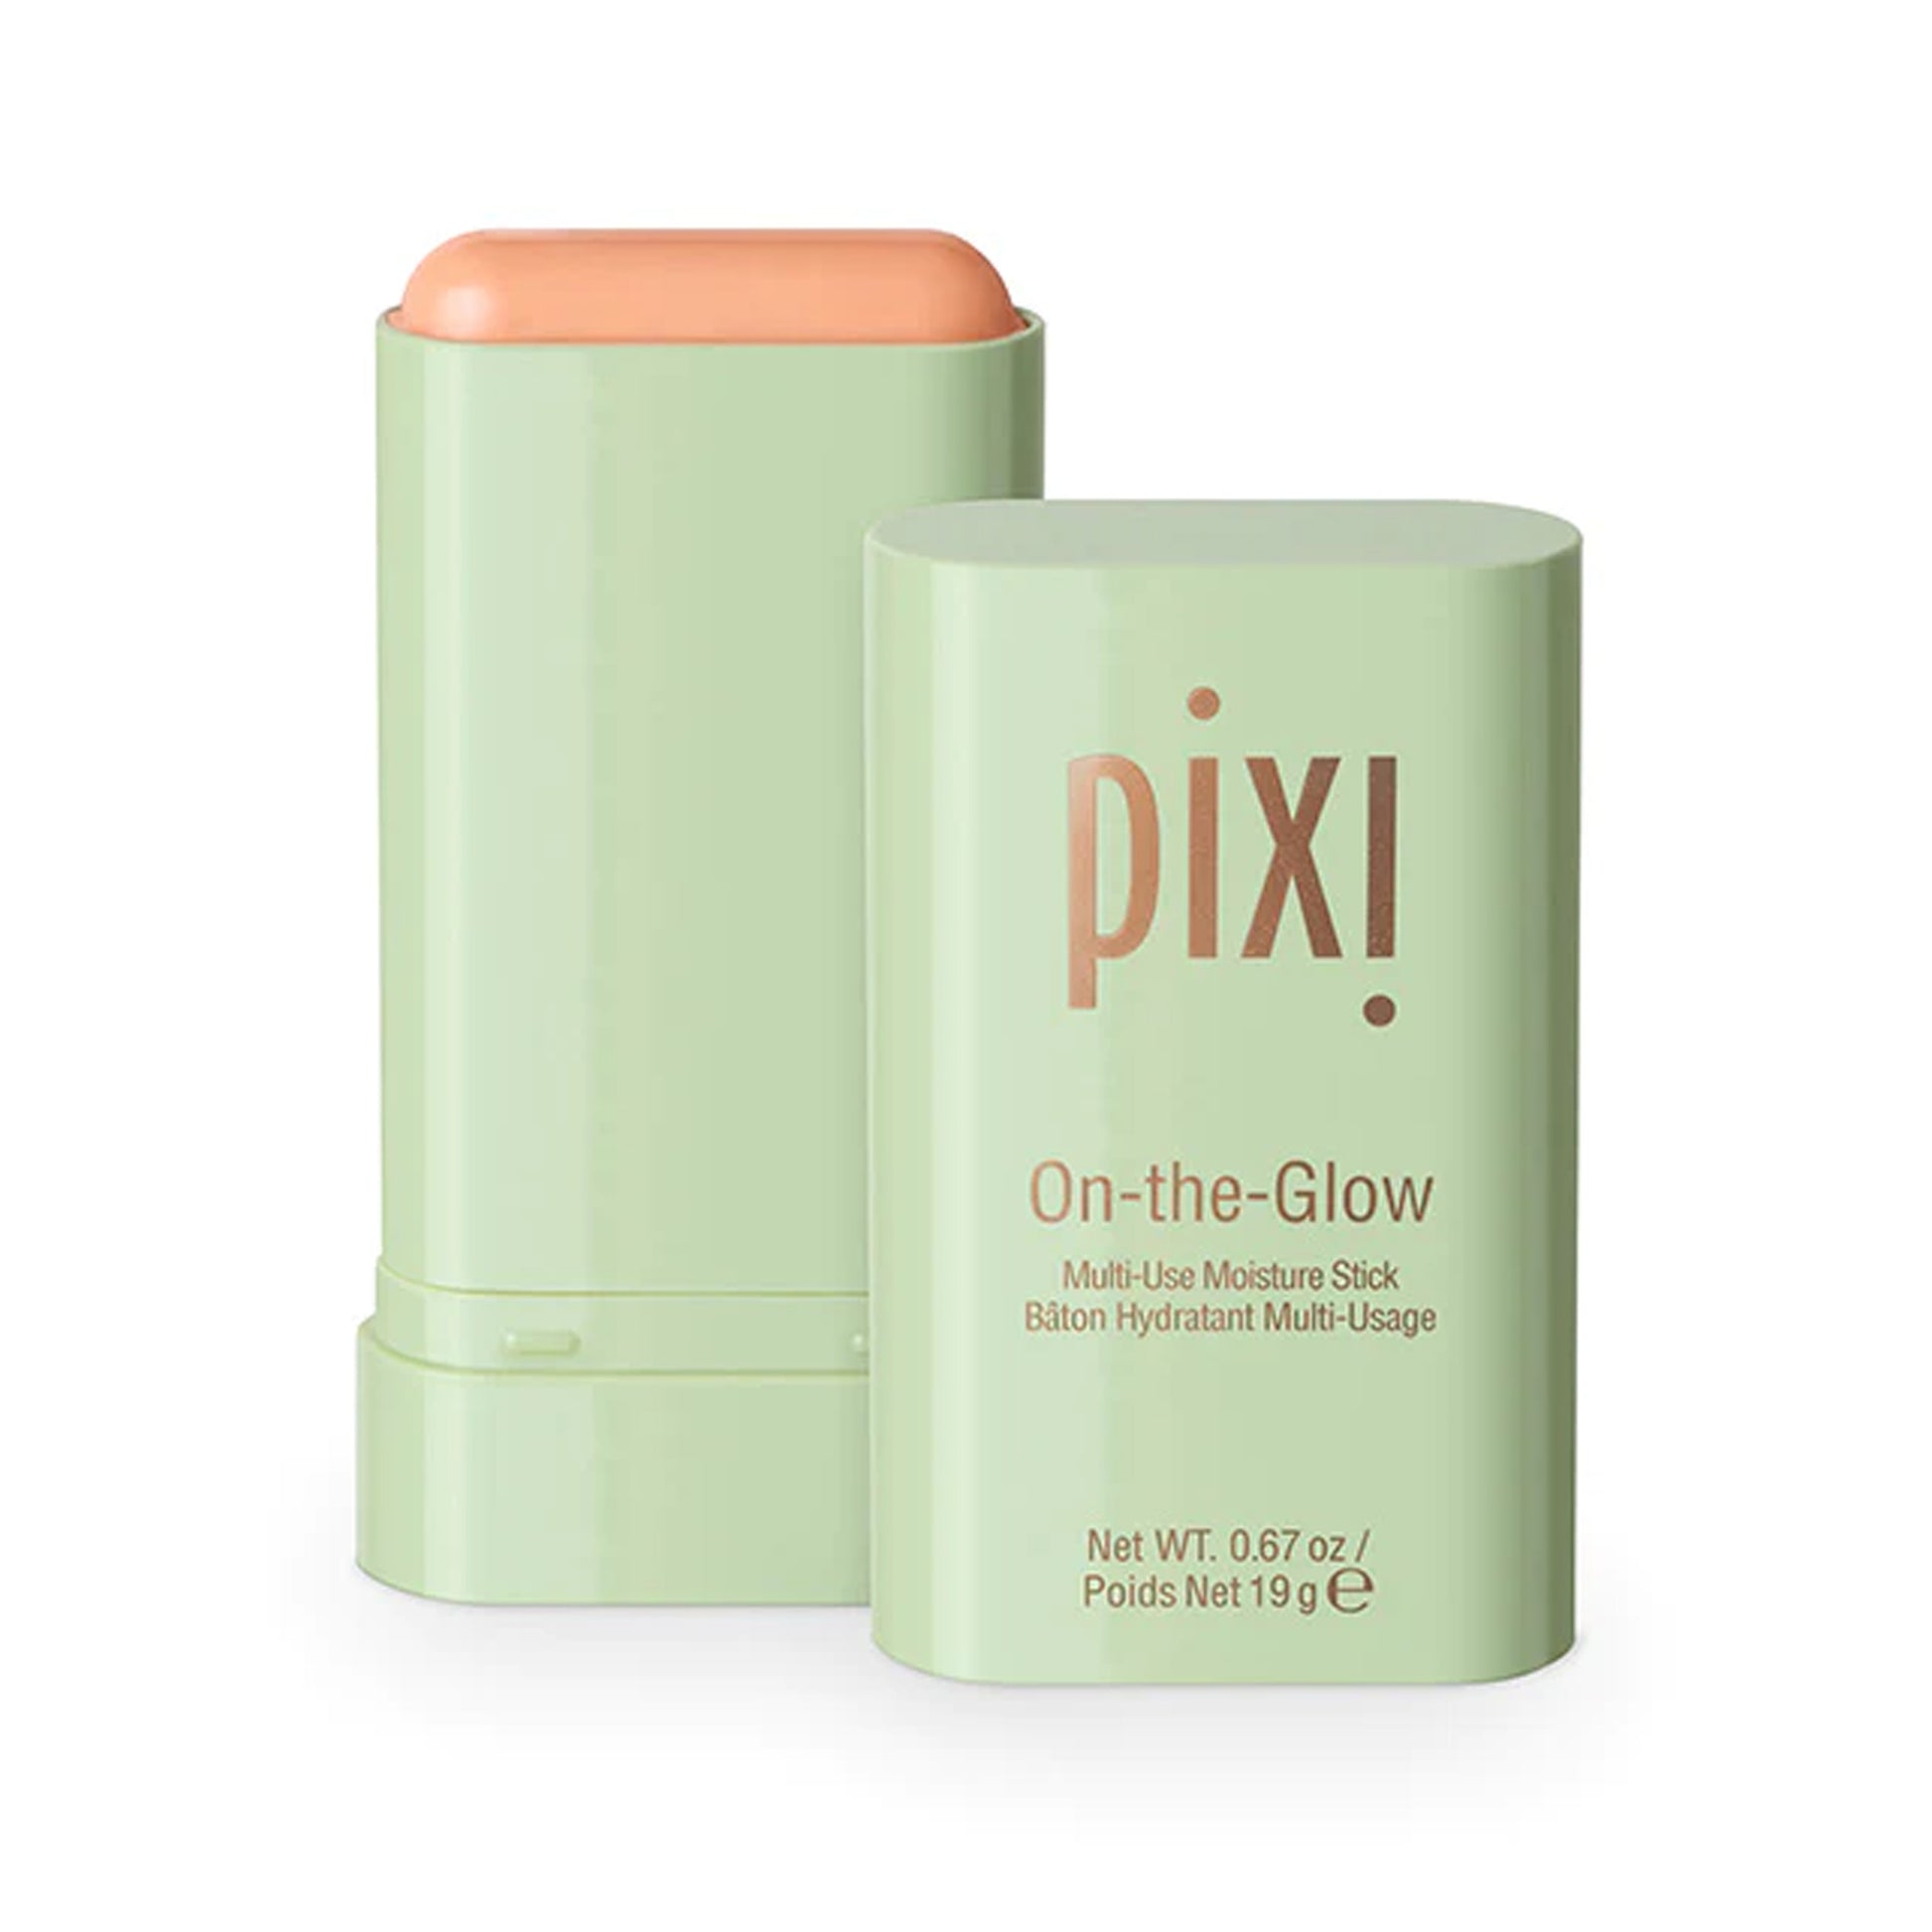 Pixi Beauty On-the-Glow